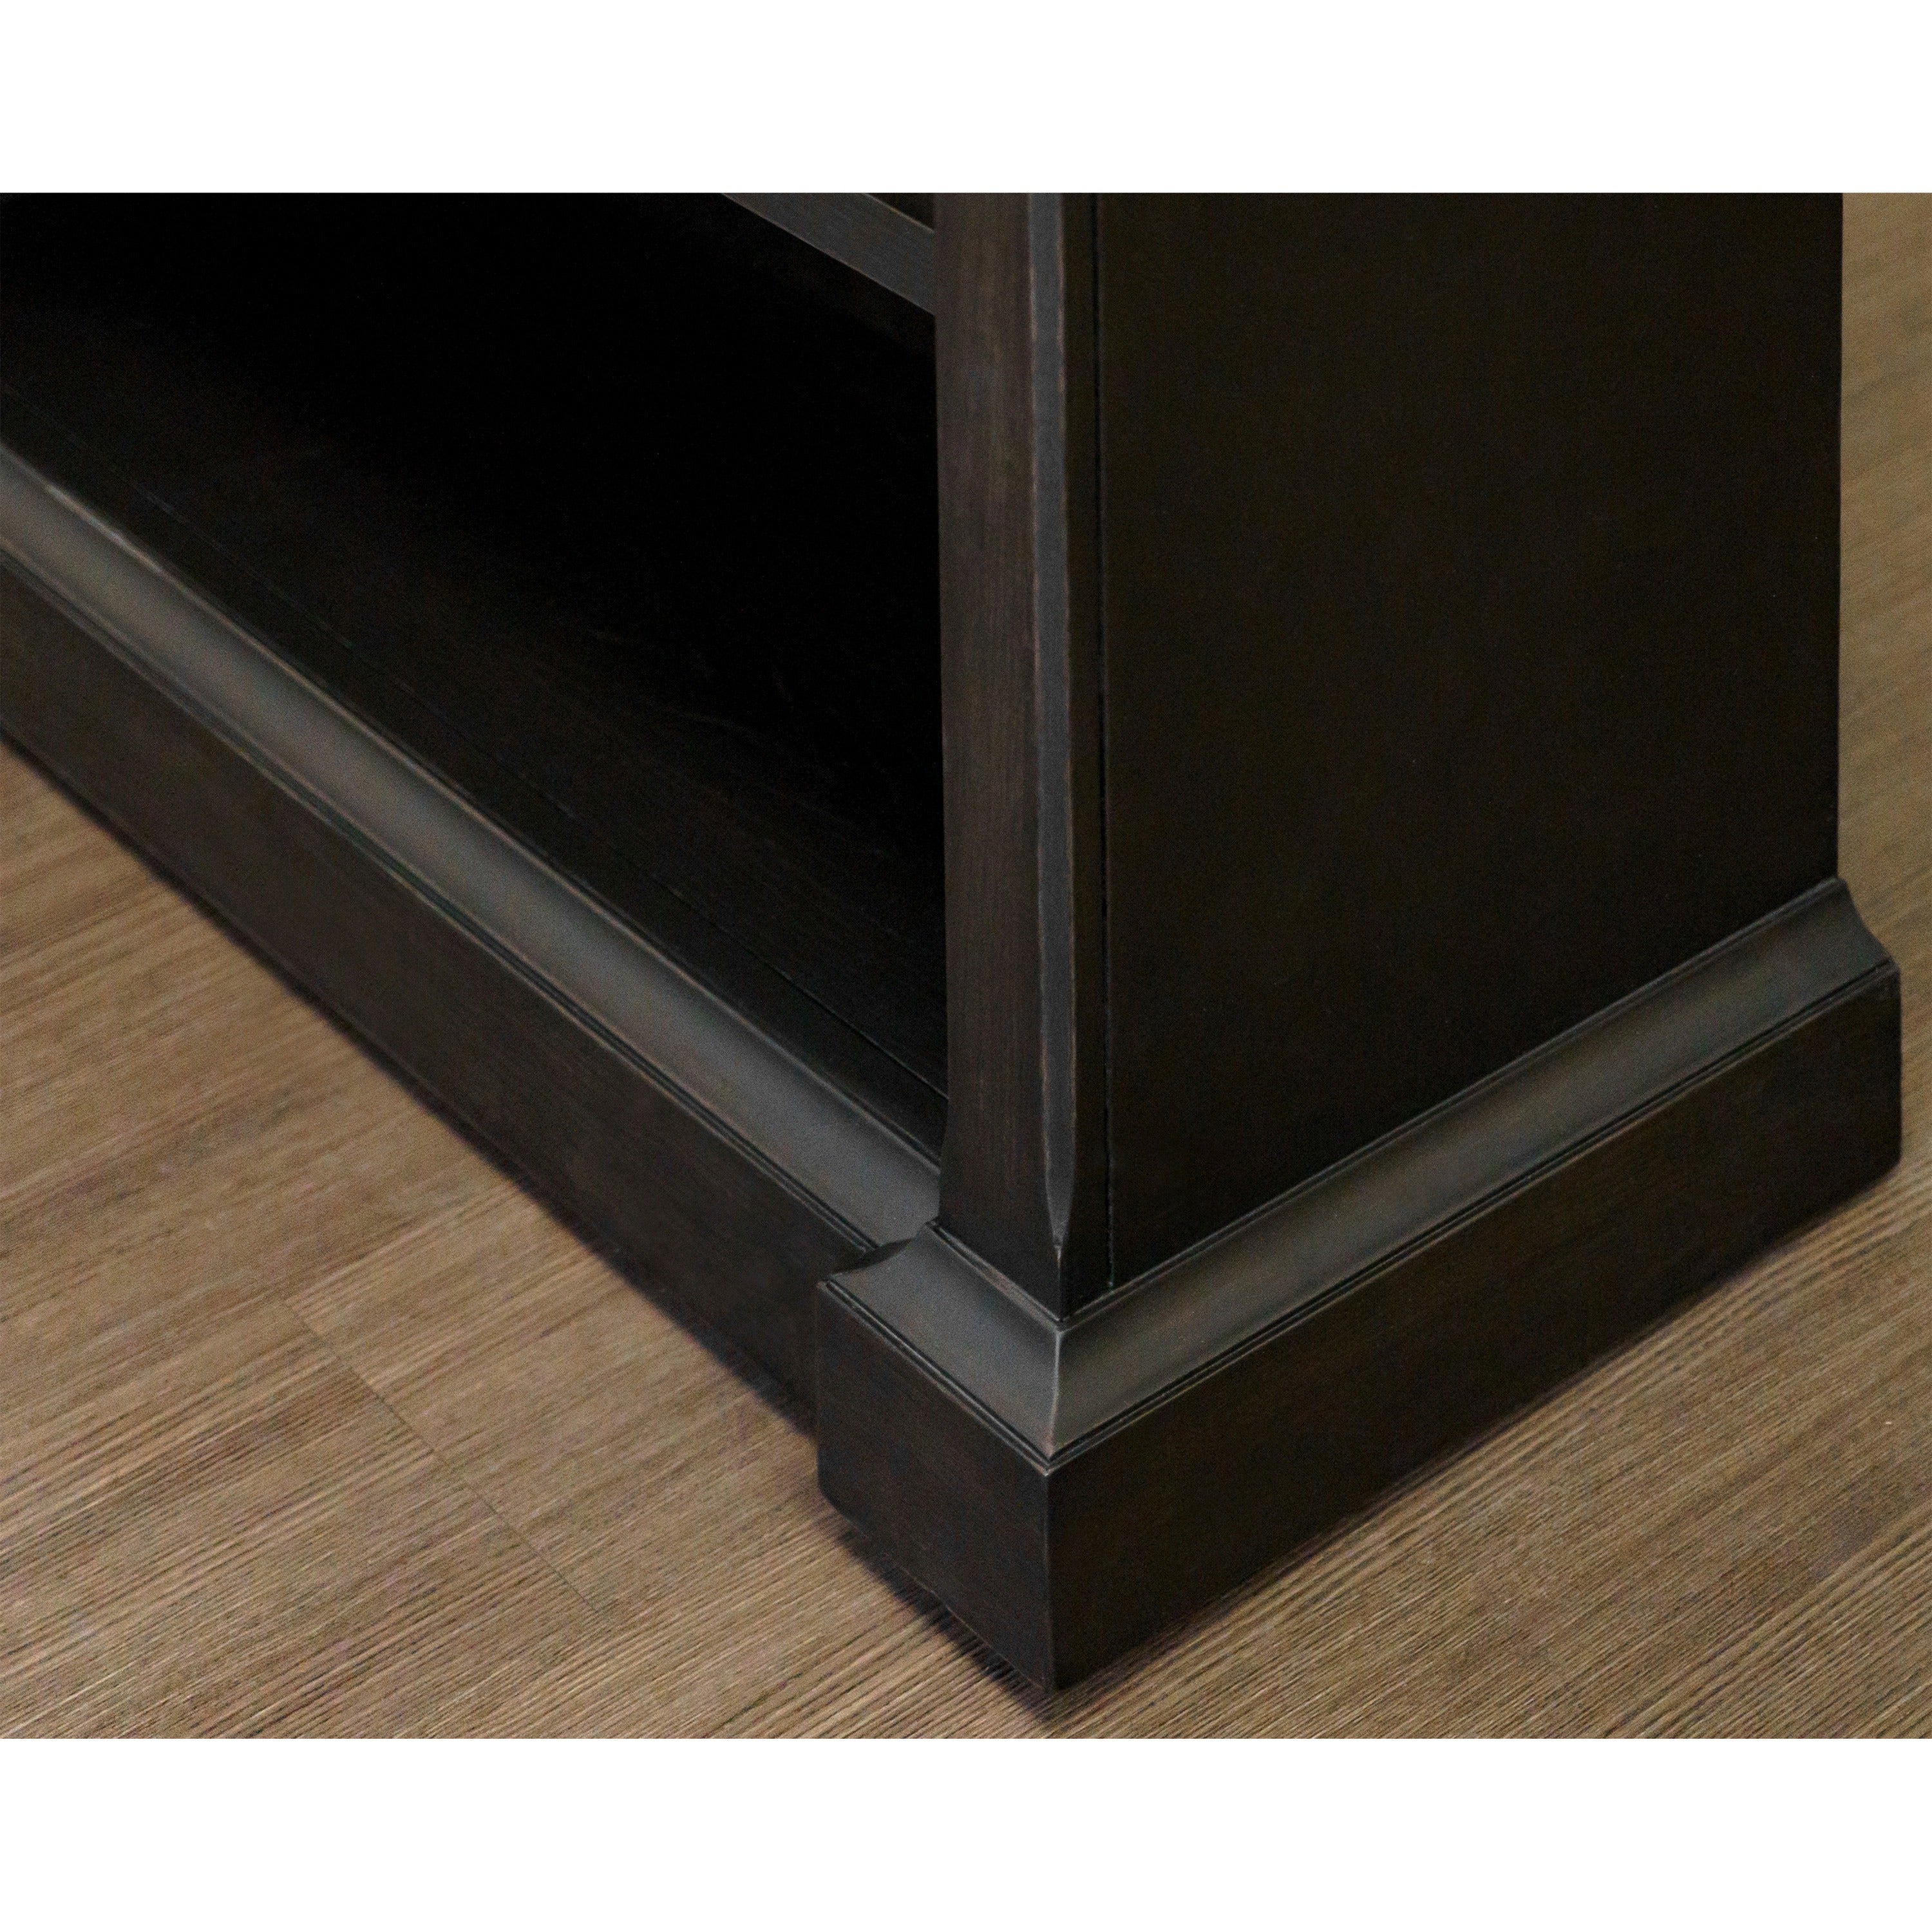 martin-kingston-office-desking-unit-38-x-1478-5-shelves-4-adjustable-shelfves-material-wood-finish-dark-chocolate-rub-through_mrtimkn3678 - 2